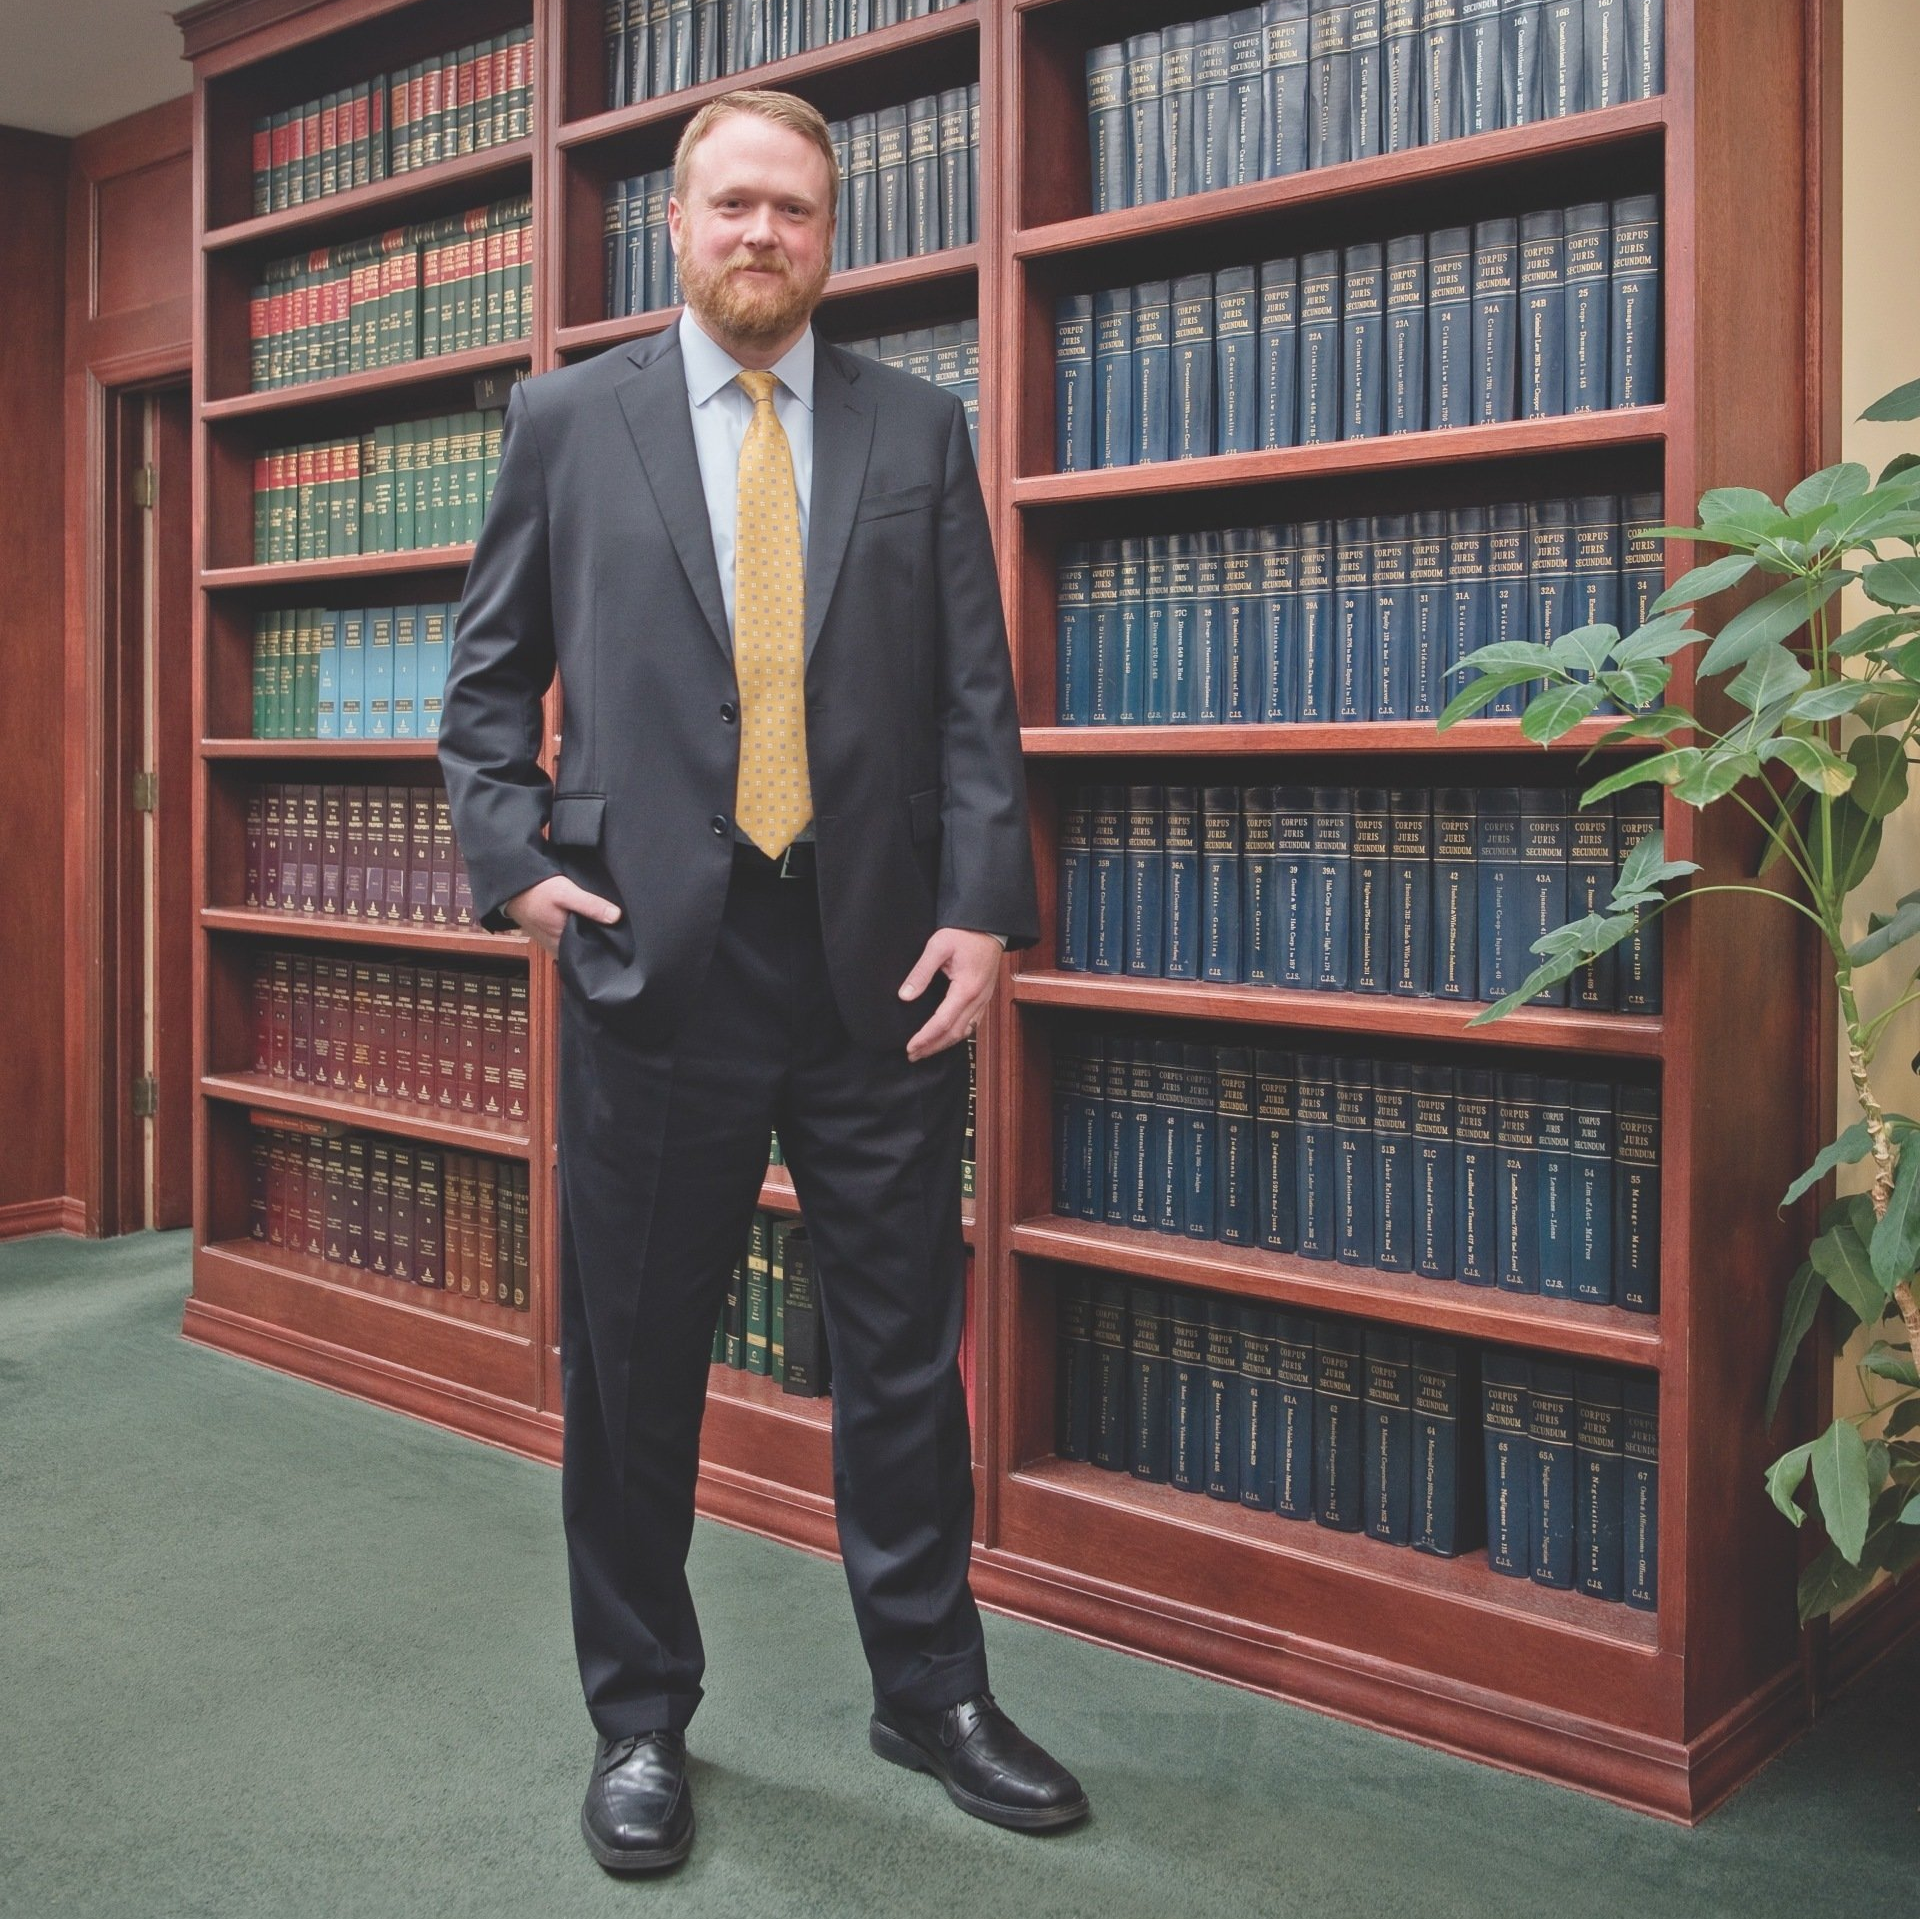 Civil Litigation Lawyer — Scott Taylor Sitting On His Office In Waynesville, NC